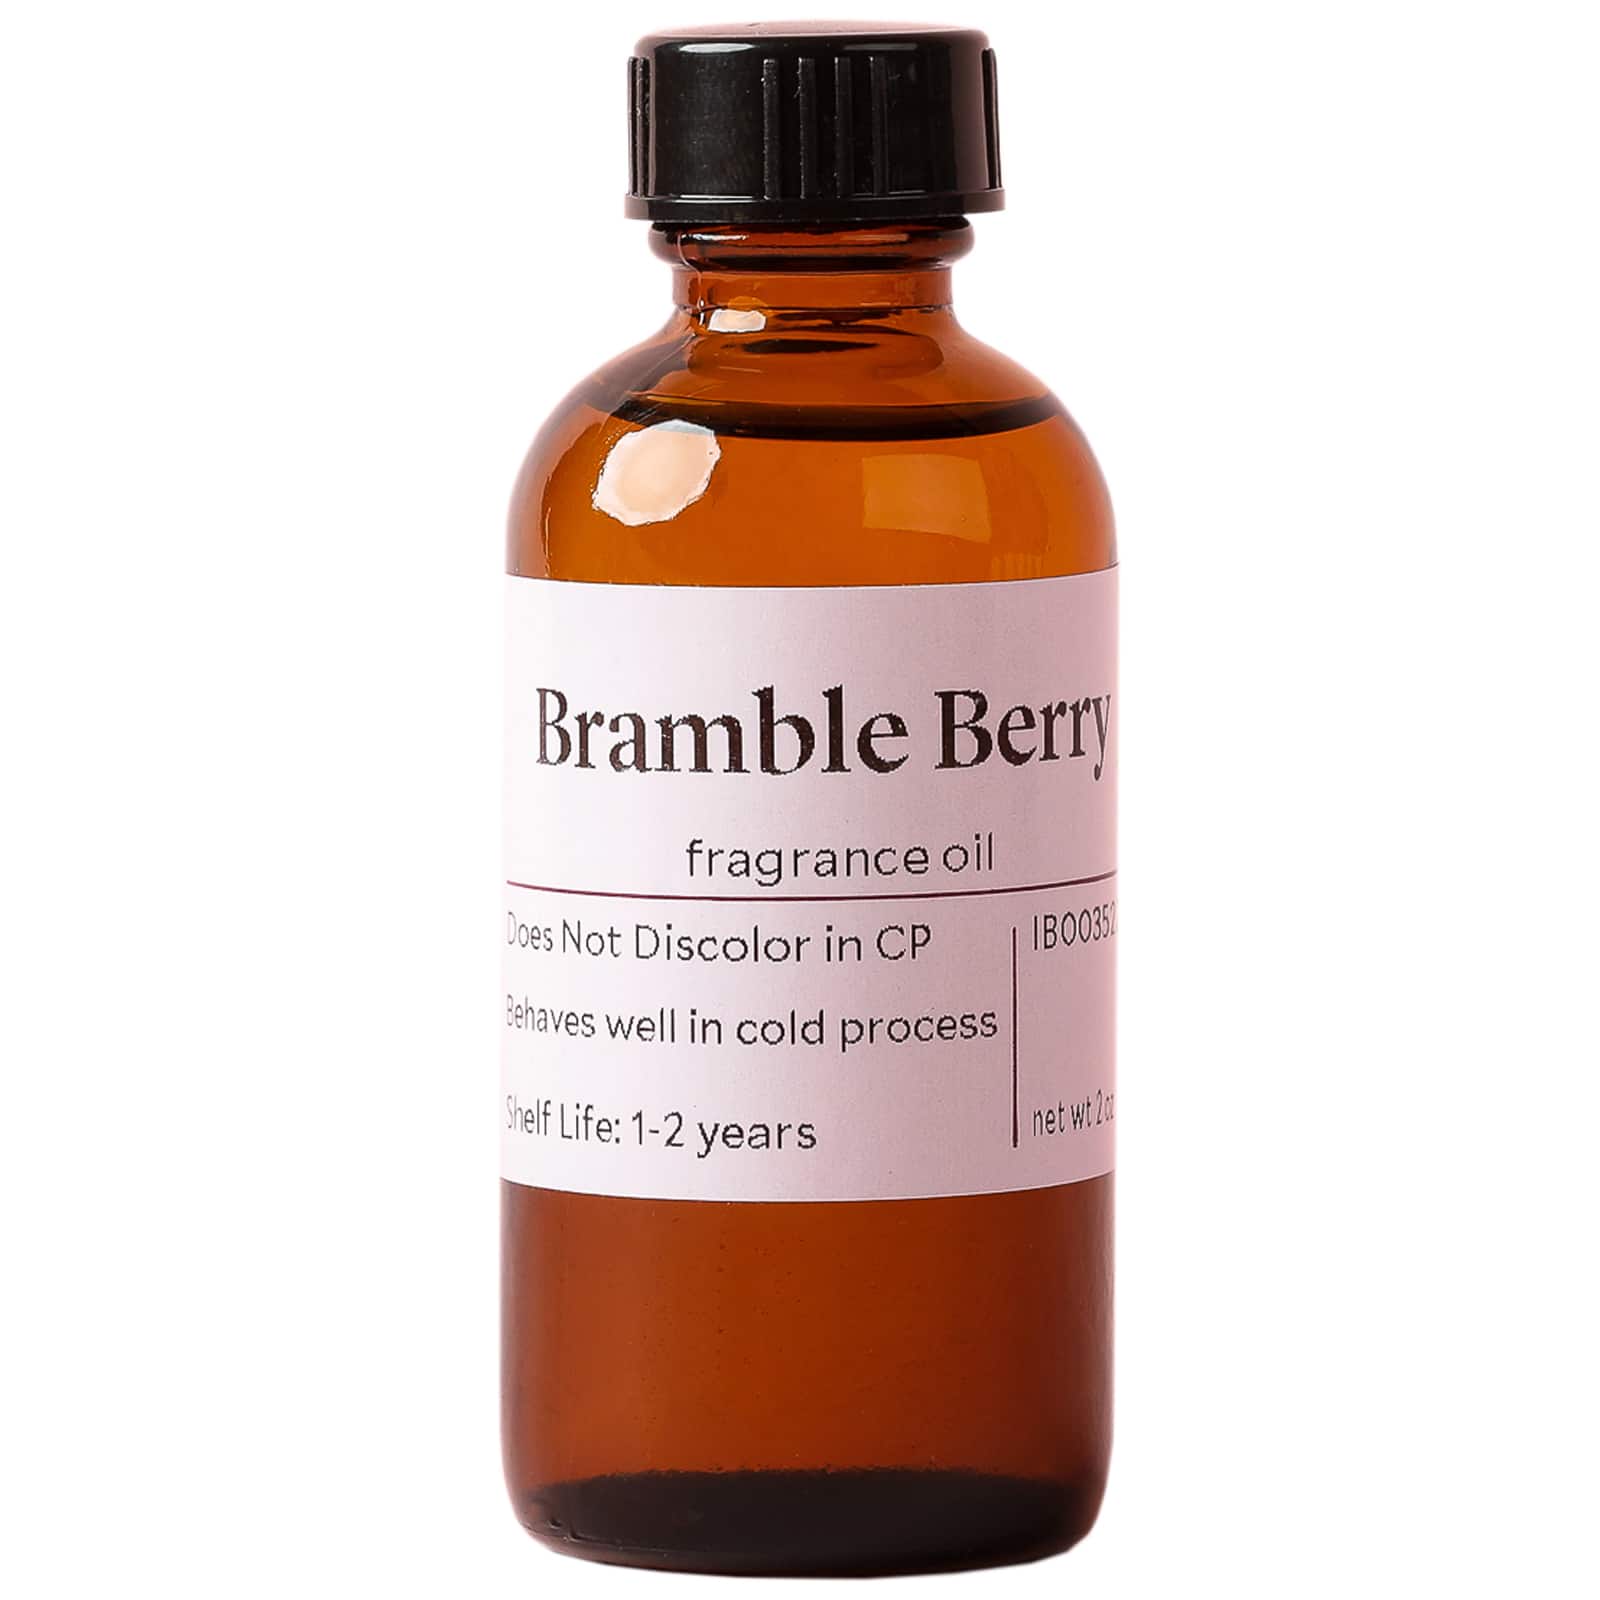 Bramble Berry Fragrance Oil